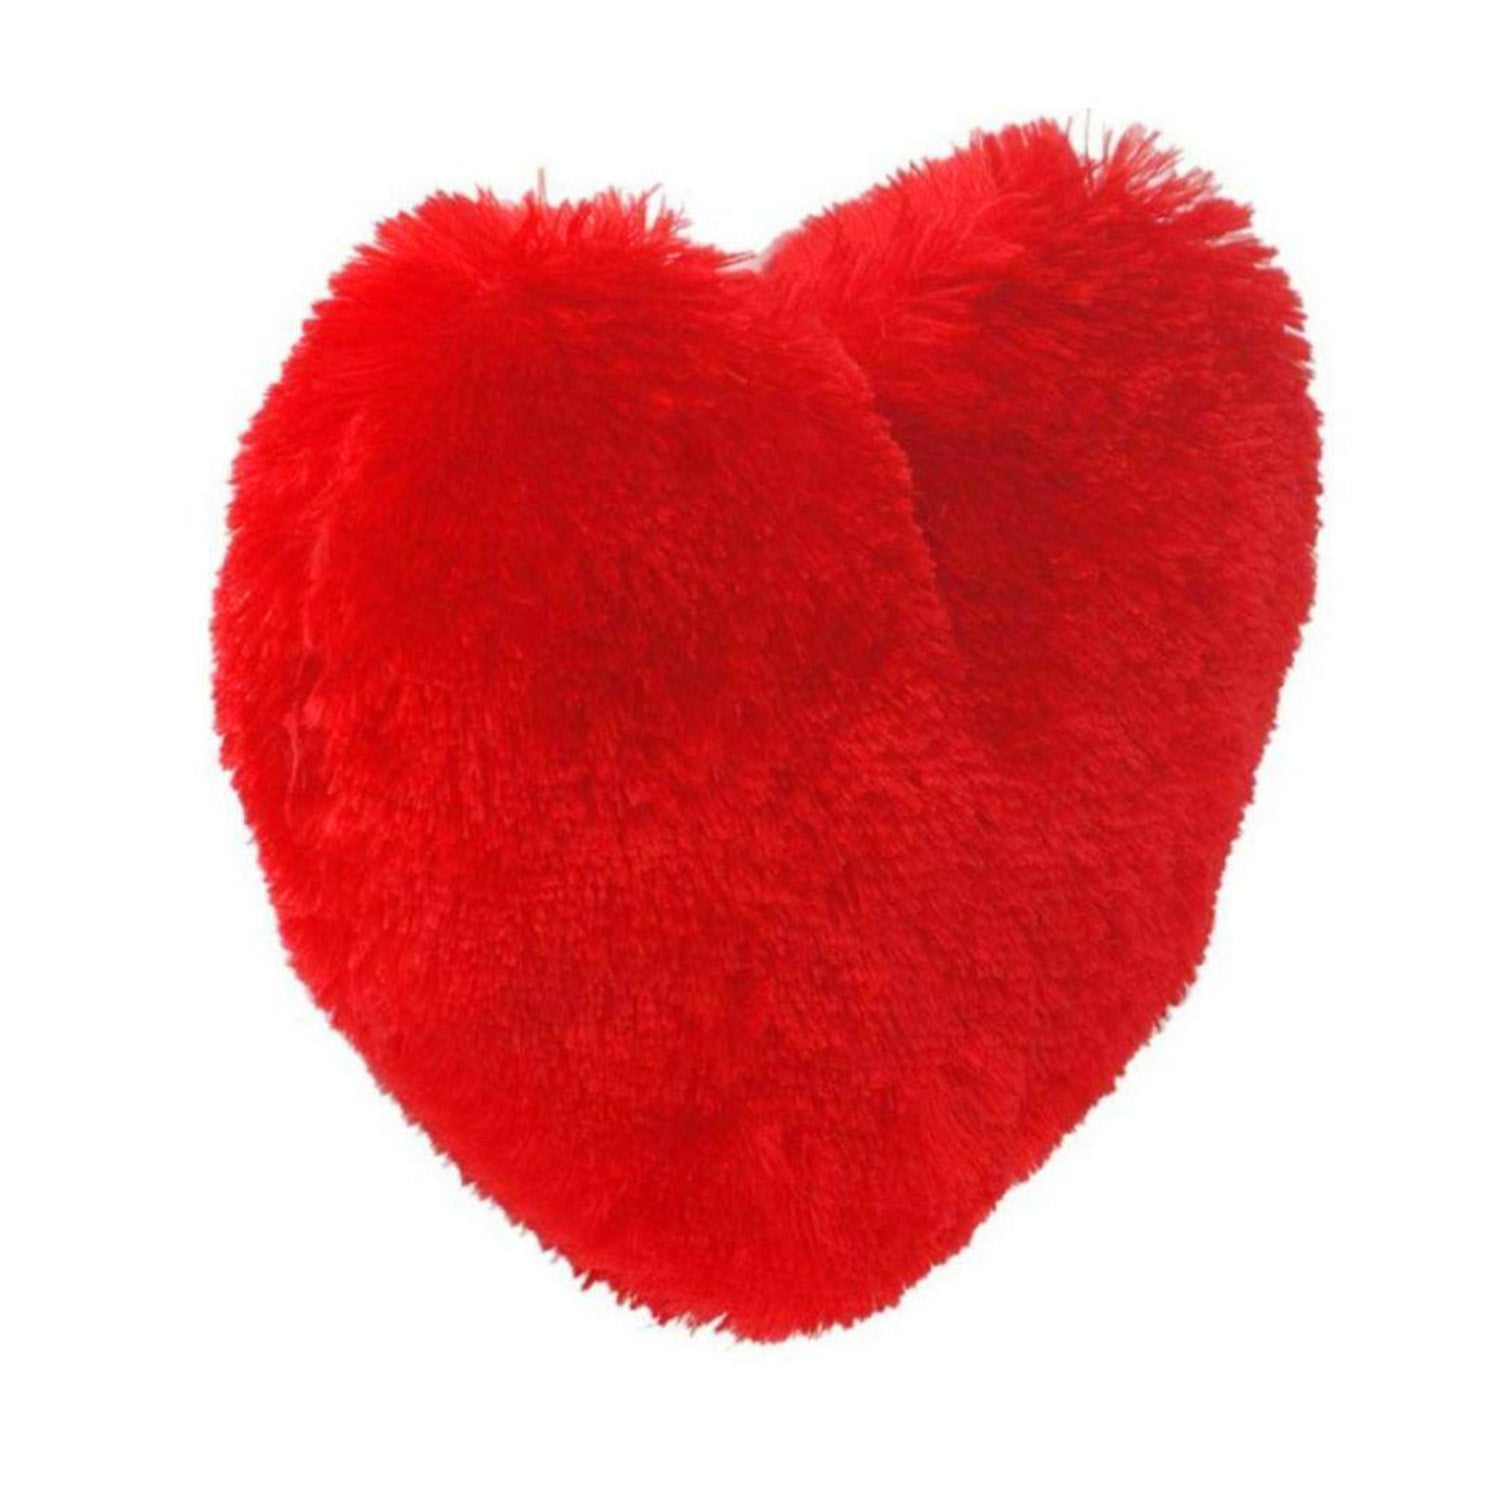 Sleepsia Heart Shaped Pillows- Combo